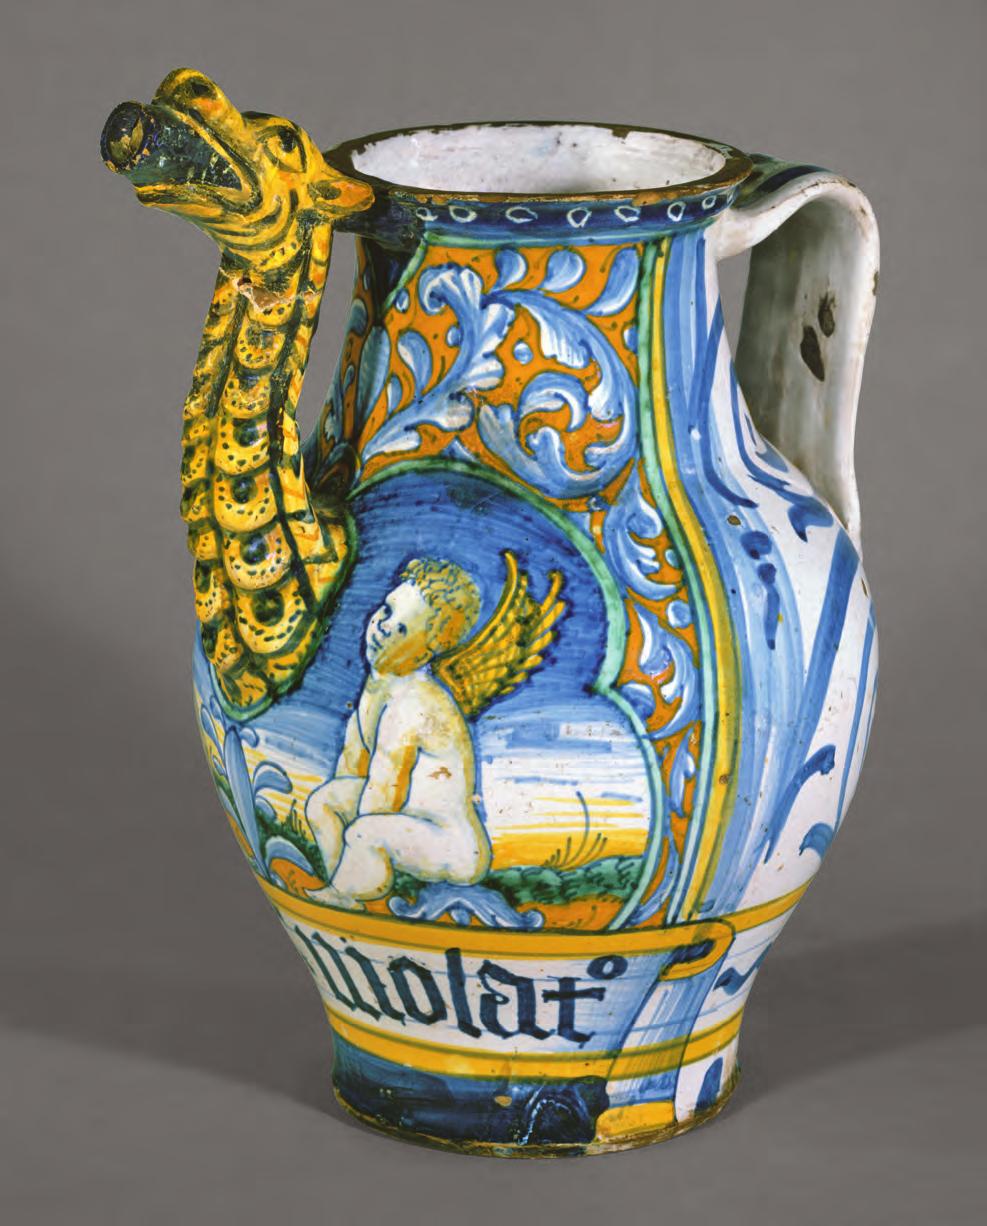 39. Apothecary jar (orciuolo). Italian (Castelli), ca. 1520.